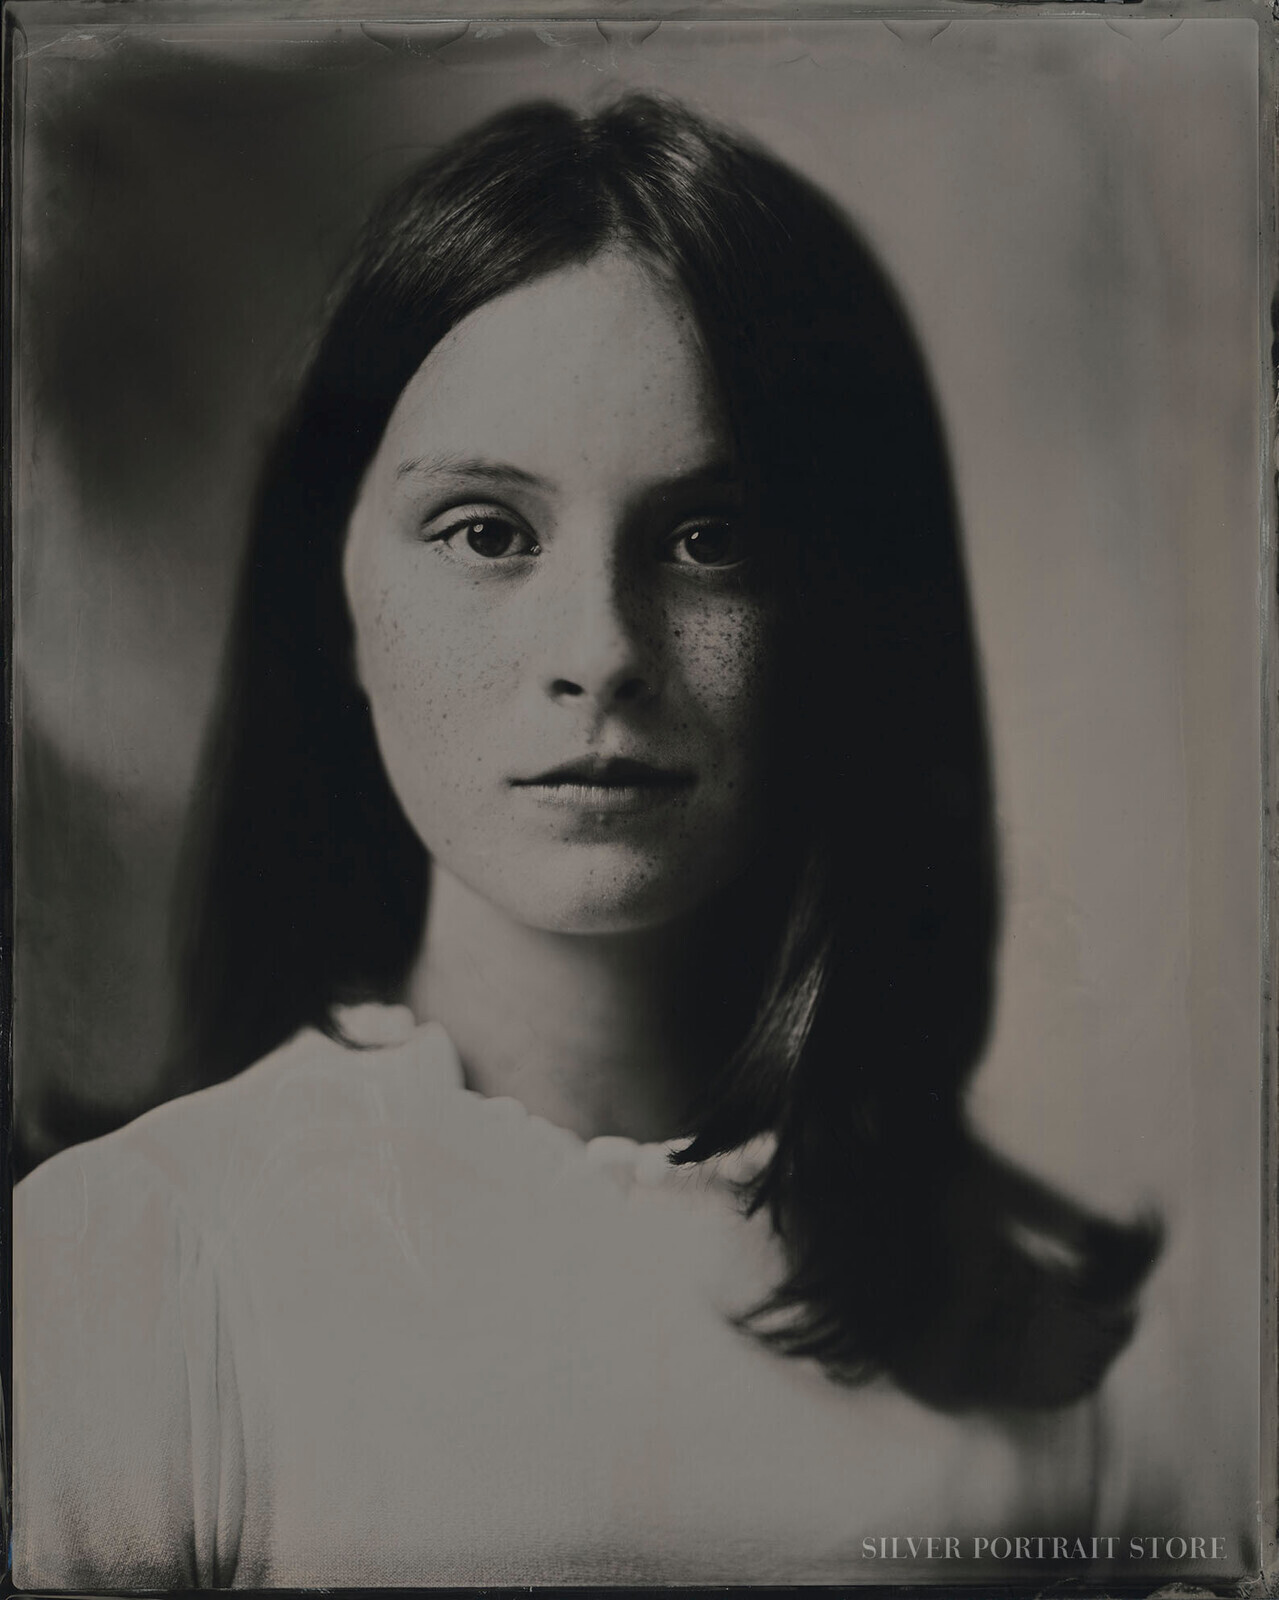 Sophie Halgren-Silver Portrait Store-Wet plate collodion-Tintype 20 x 25 cm.